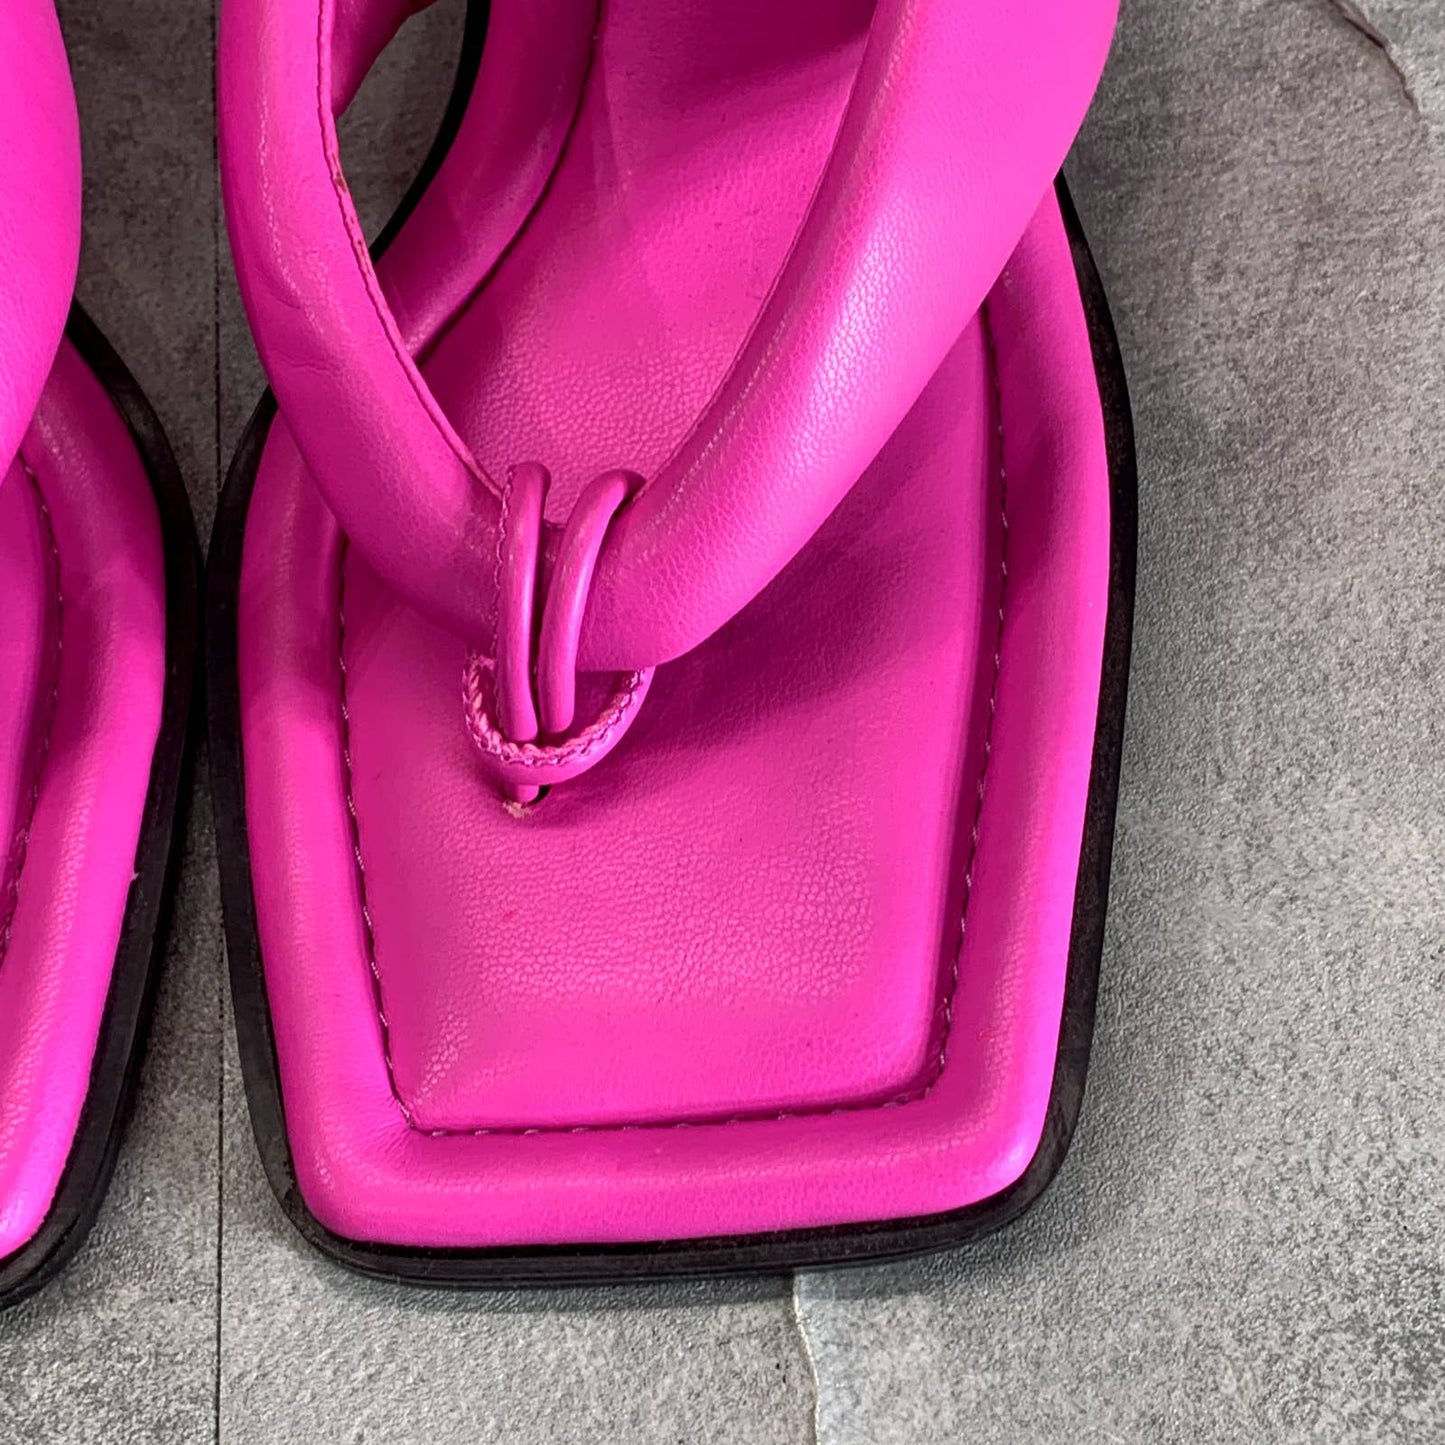 CIRCUS By SAM EDELMAN Women's Pink Punch Skeet Square-Toe Dress Sandals SZ 7.5